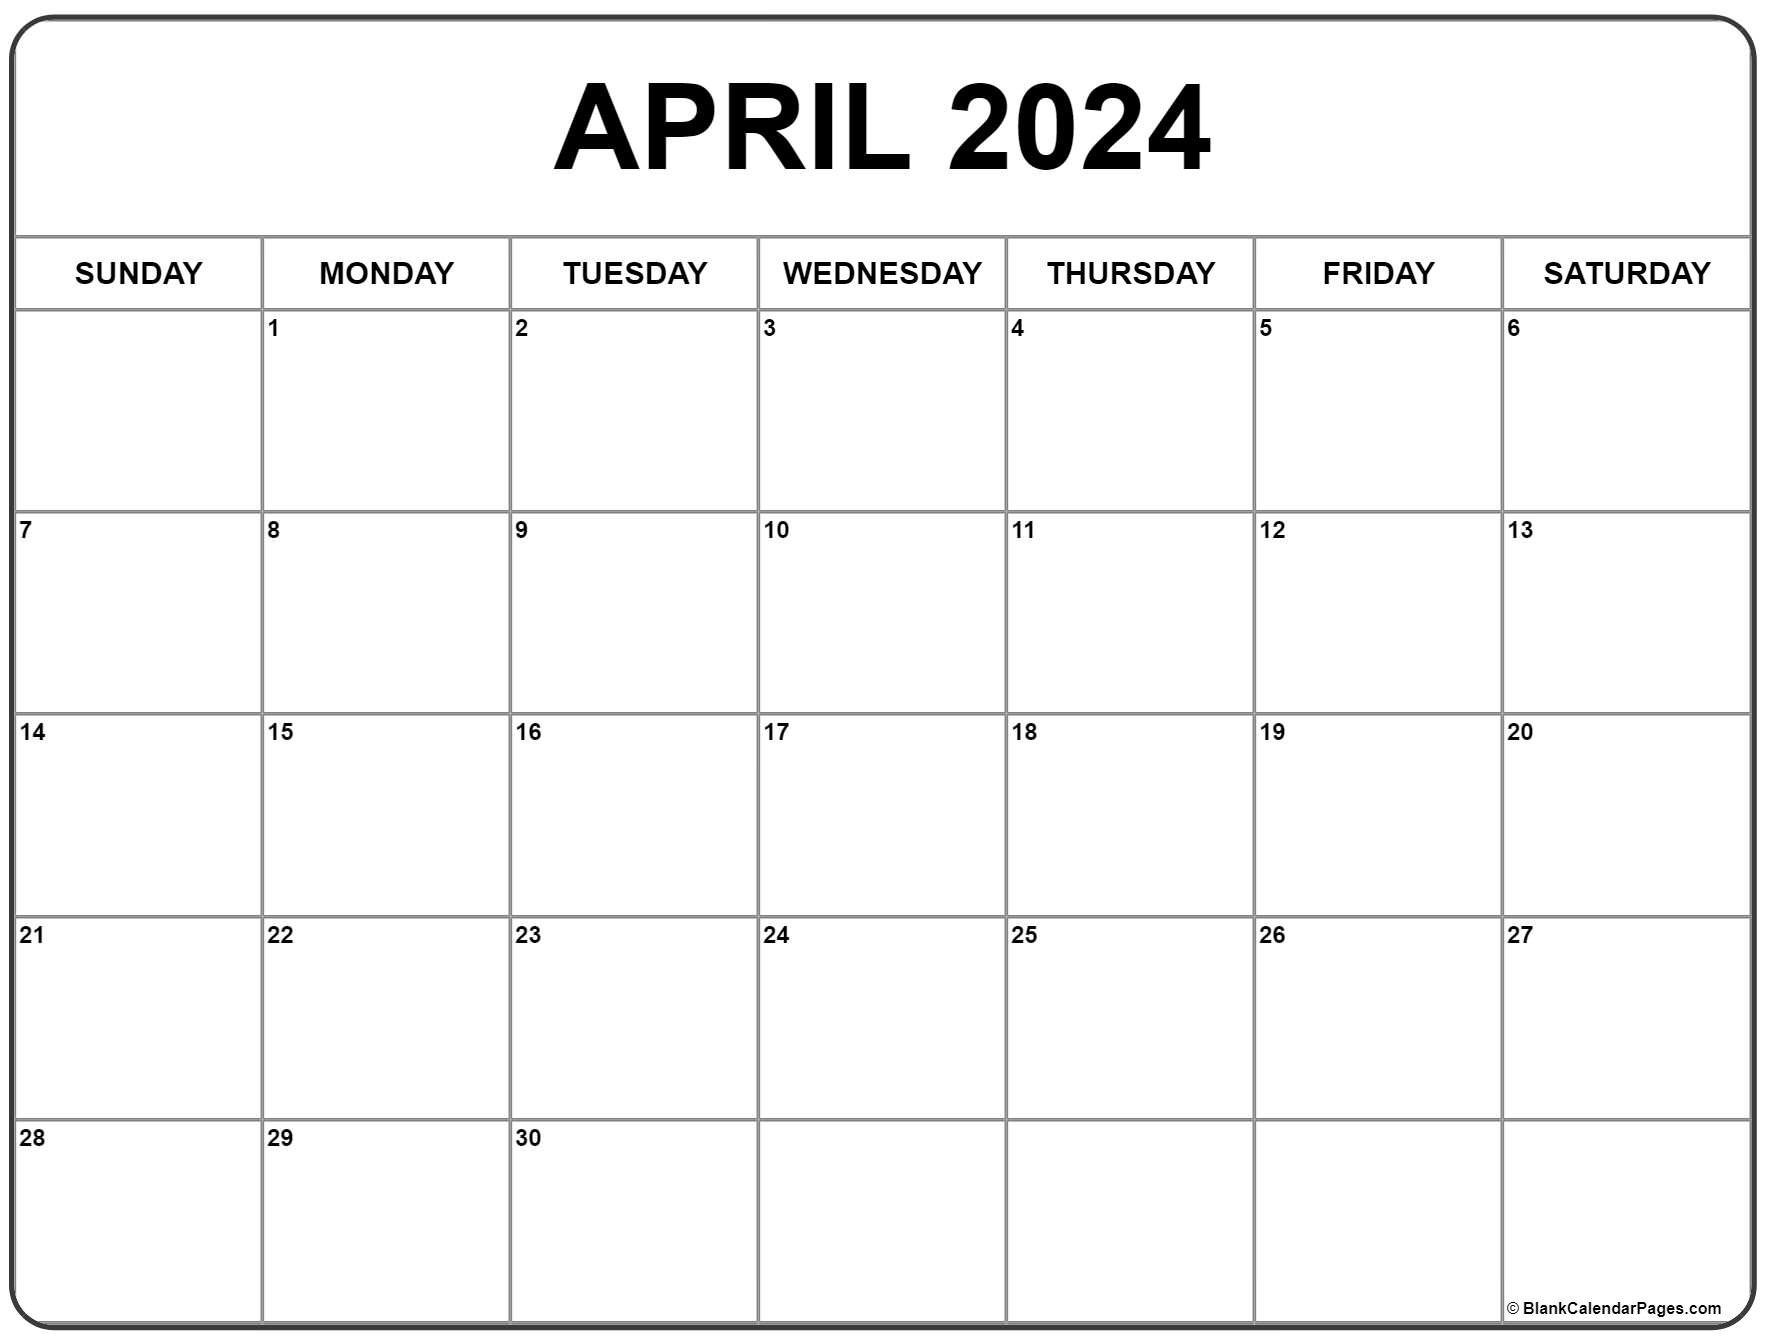 April 2024 Calendar | Free Printable Calendar for Printable Calendar March And April 2024